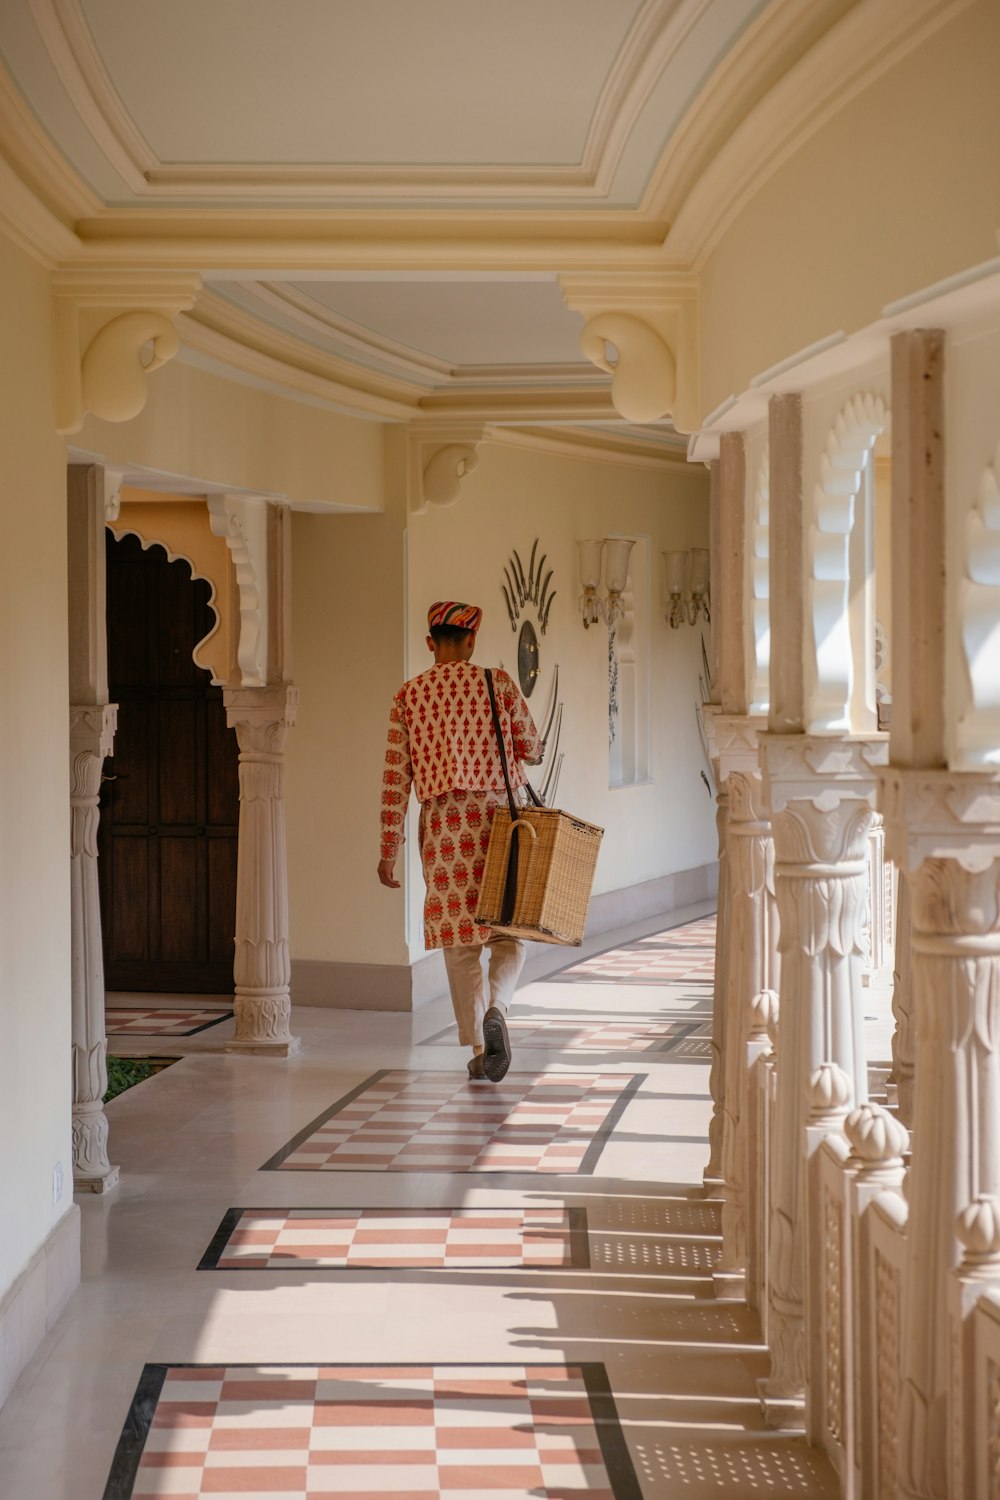 a man walking down a hallway carrying a basket